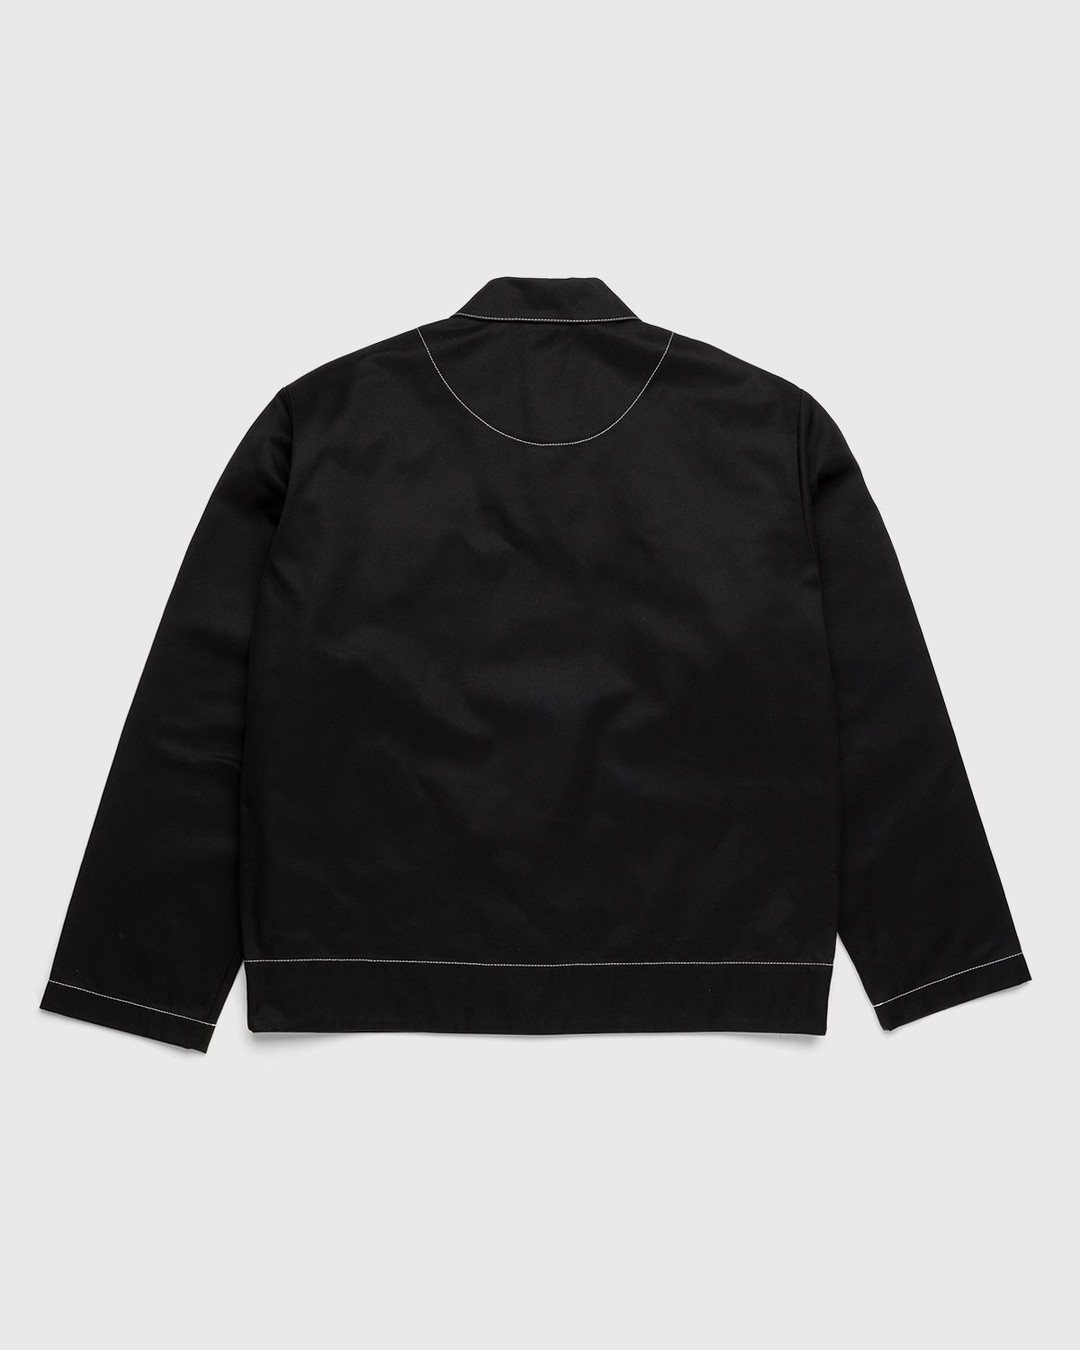 Acne Studios – Heavy Twill Jacket - Outerwear - Black - Image 2